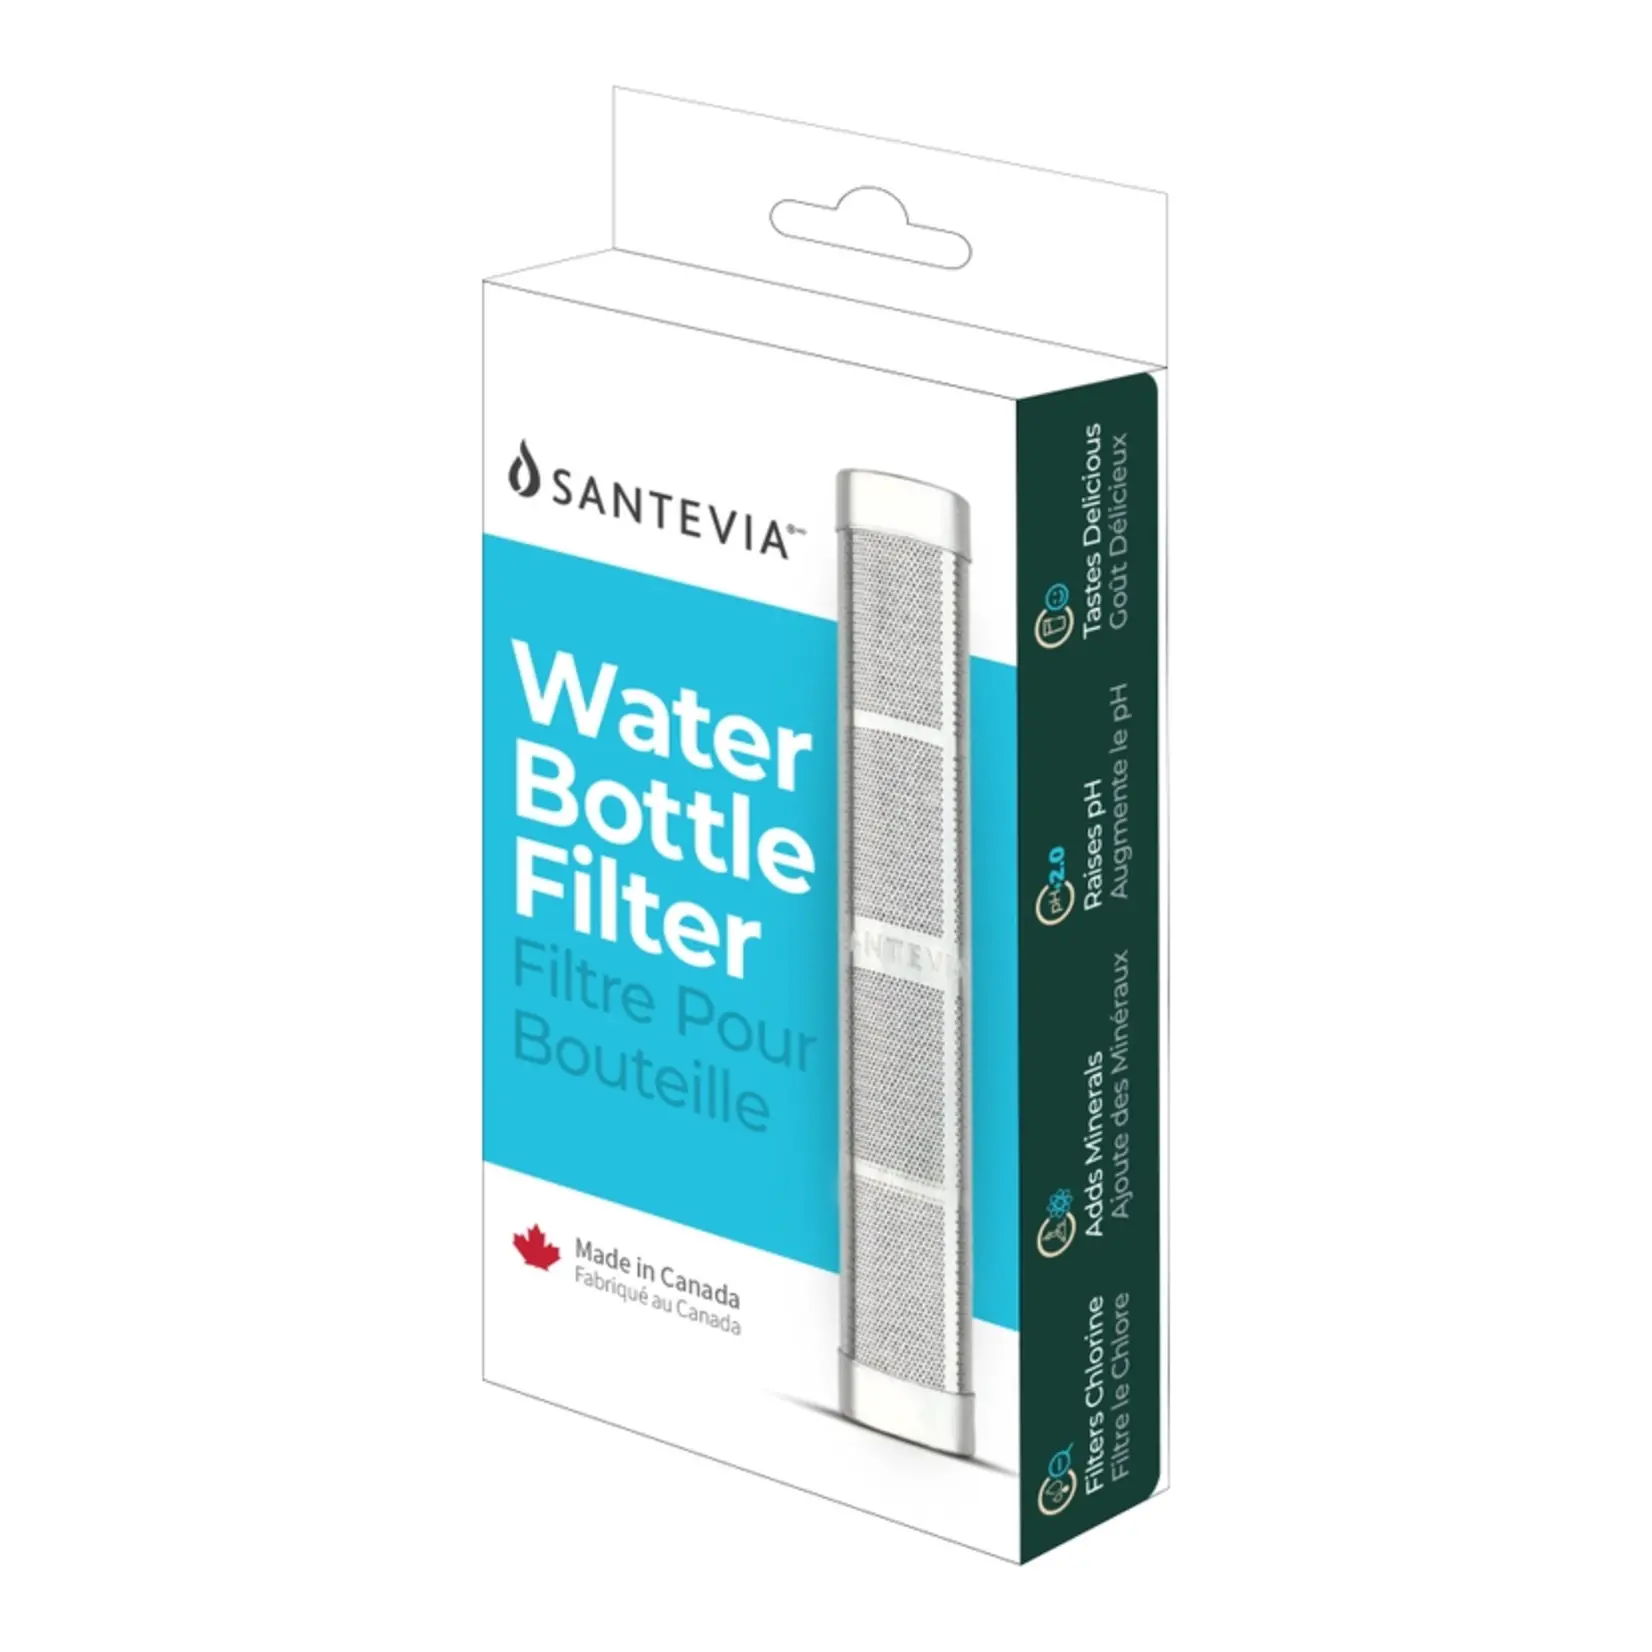 Santevia Santavia Water Bottle Filter